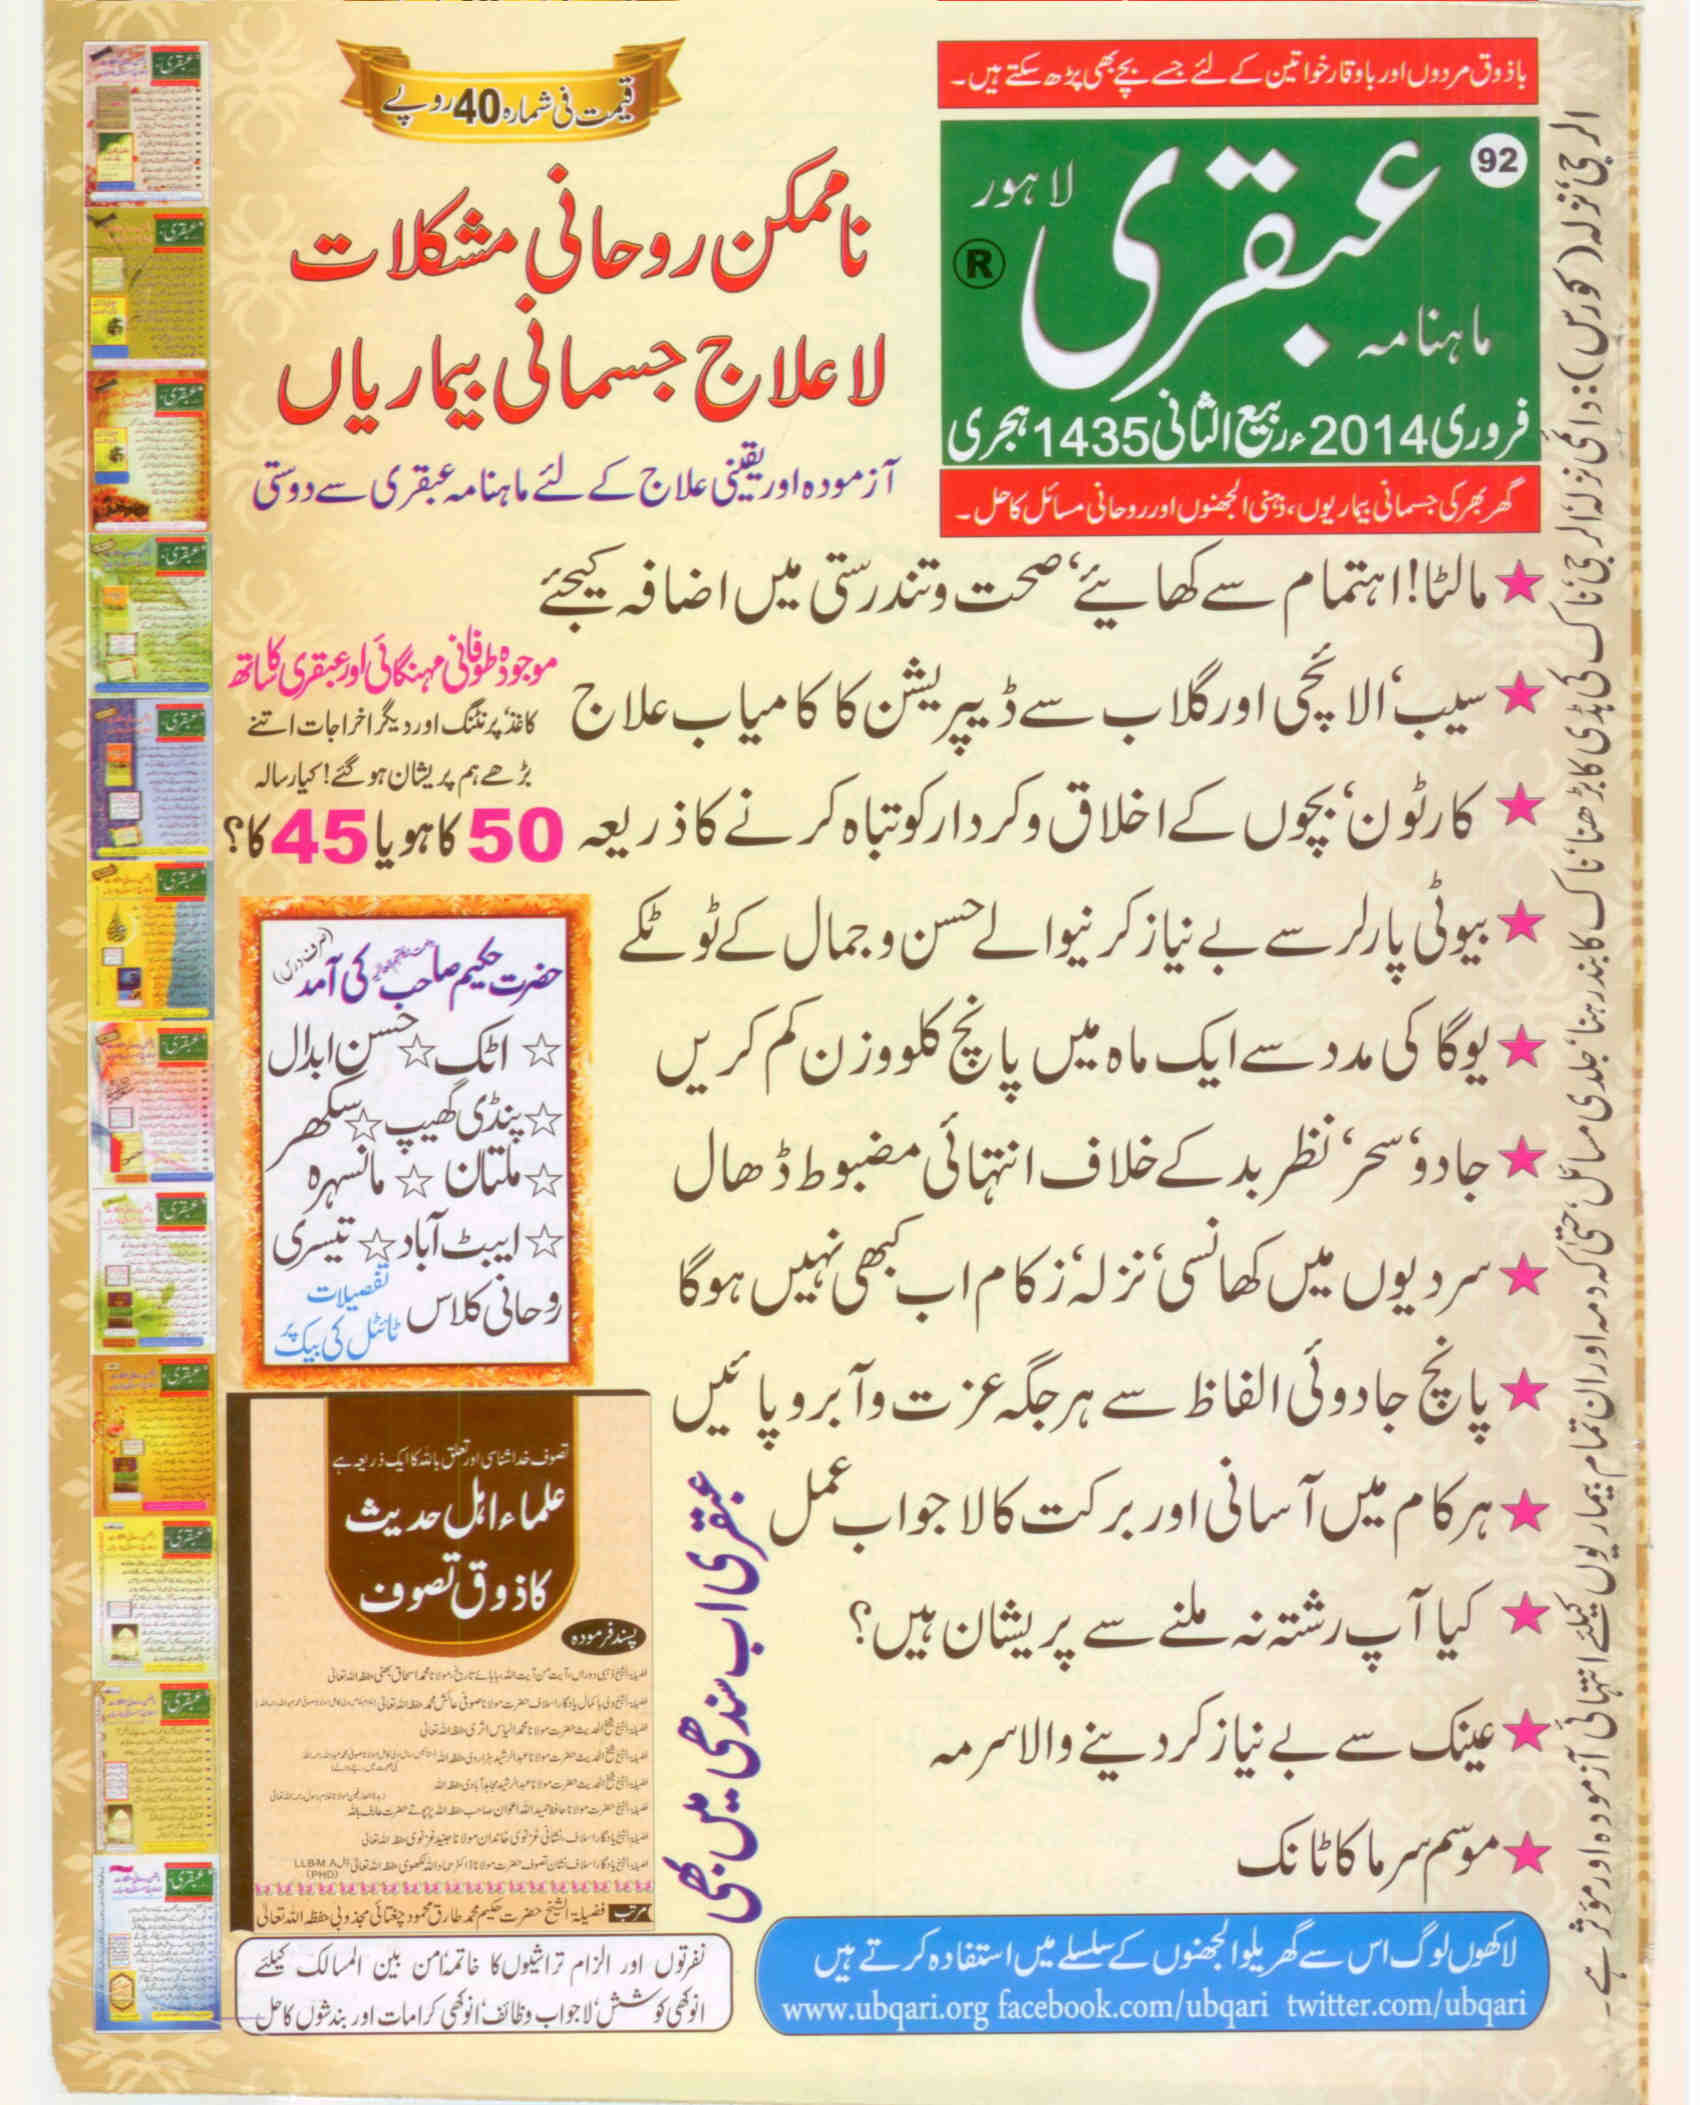 Ubqari Magazine February 2014.Pdf Free Download & Read Online